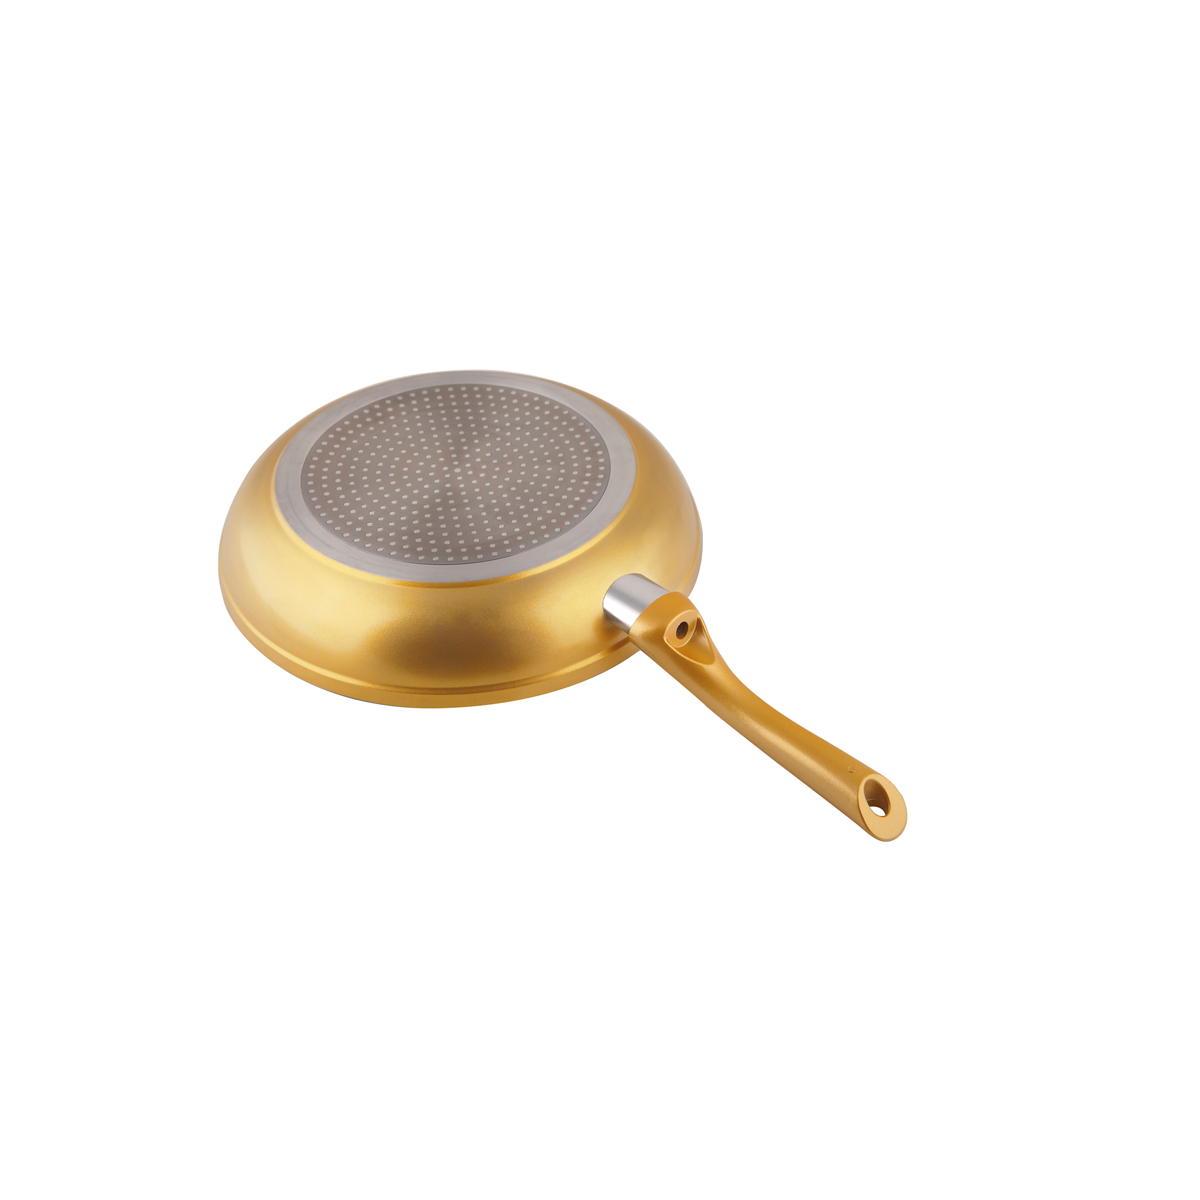 DIRECT (Aluminium, BEST Deckel Keramik) Ceramicore Gold mit Bratpfanne Beschichtung: 24cm